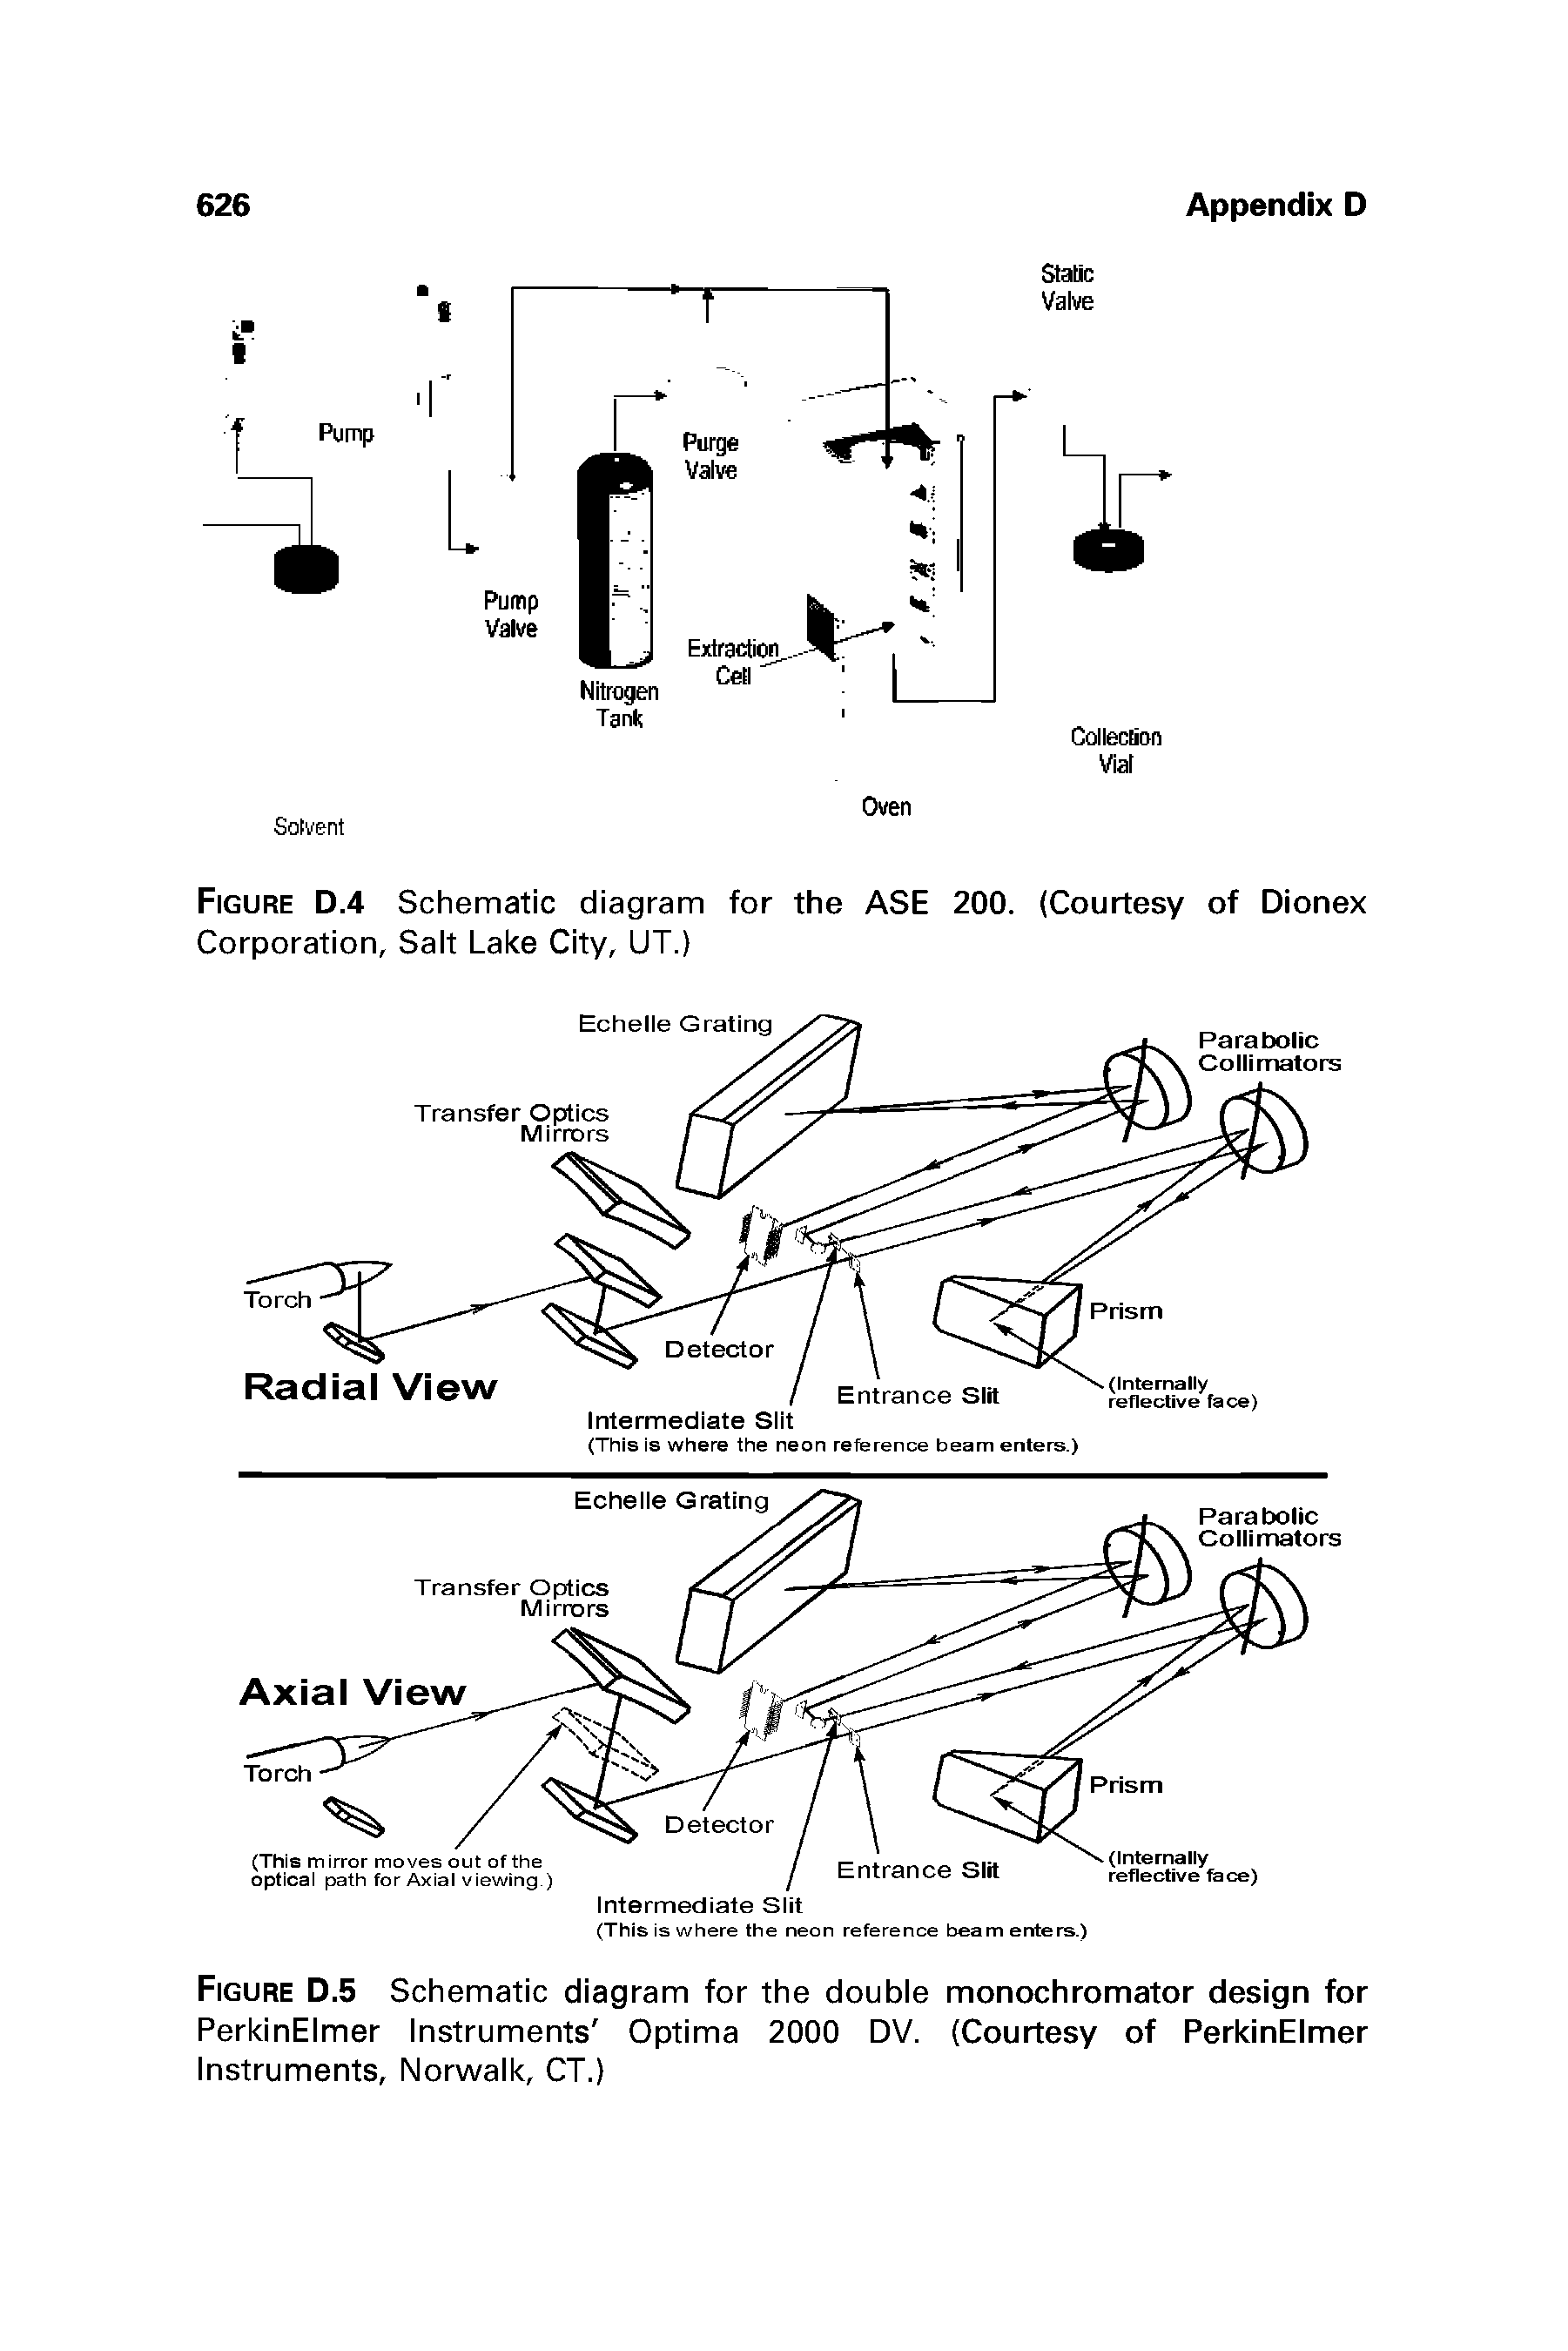 Figure D.5 Schematic diagram for the doubie monochromator design for PerkinEimer instruments Optima 2000 DV. (Courtesy of PerkinElmer instruments, Norwaik, CT.)...